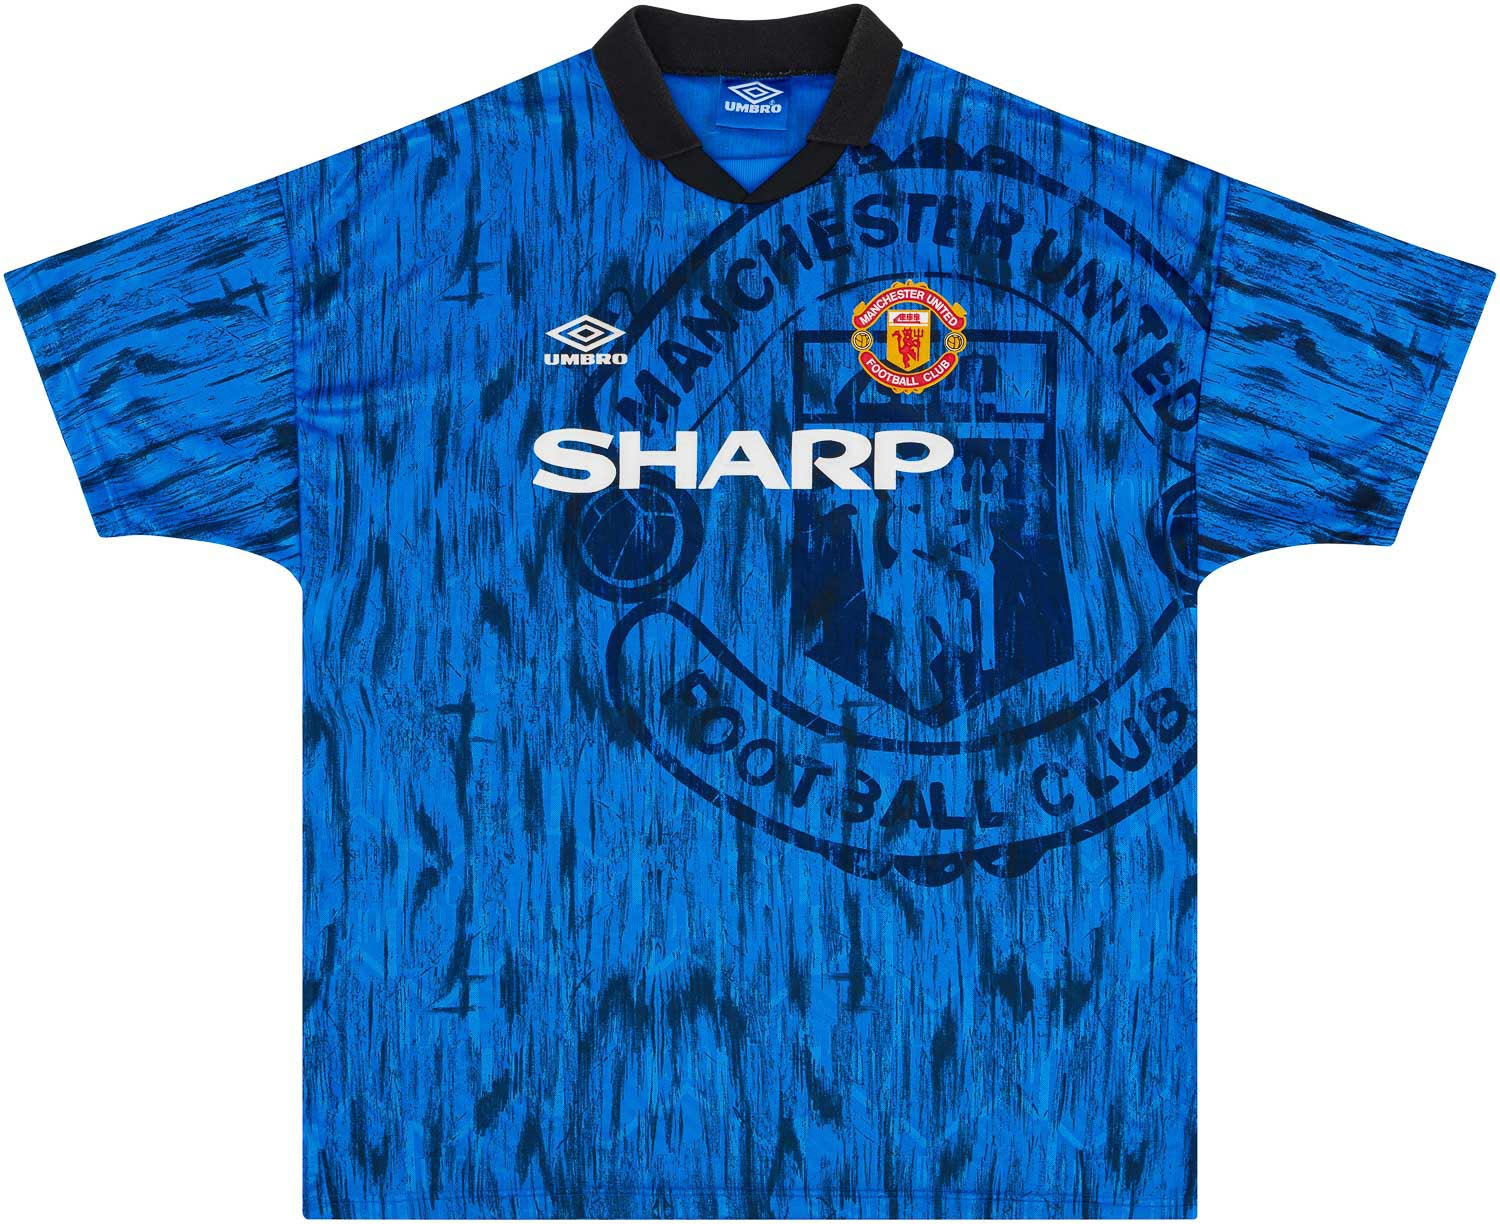 1992-93 Manchester United Away Shirt